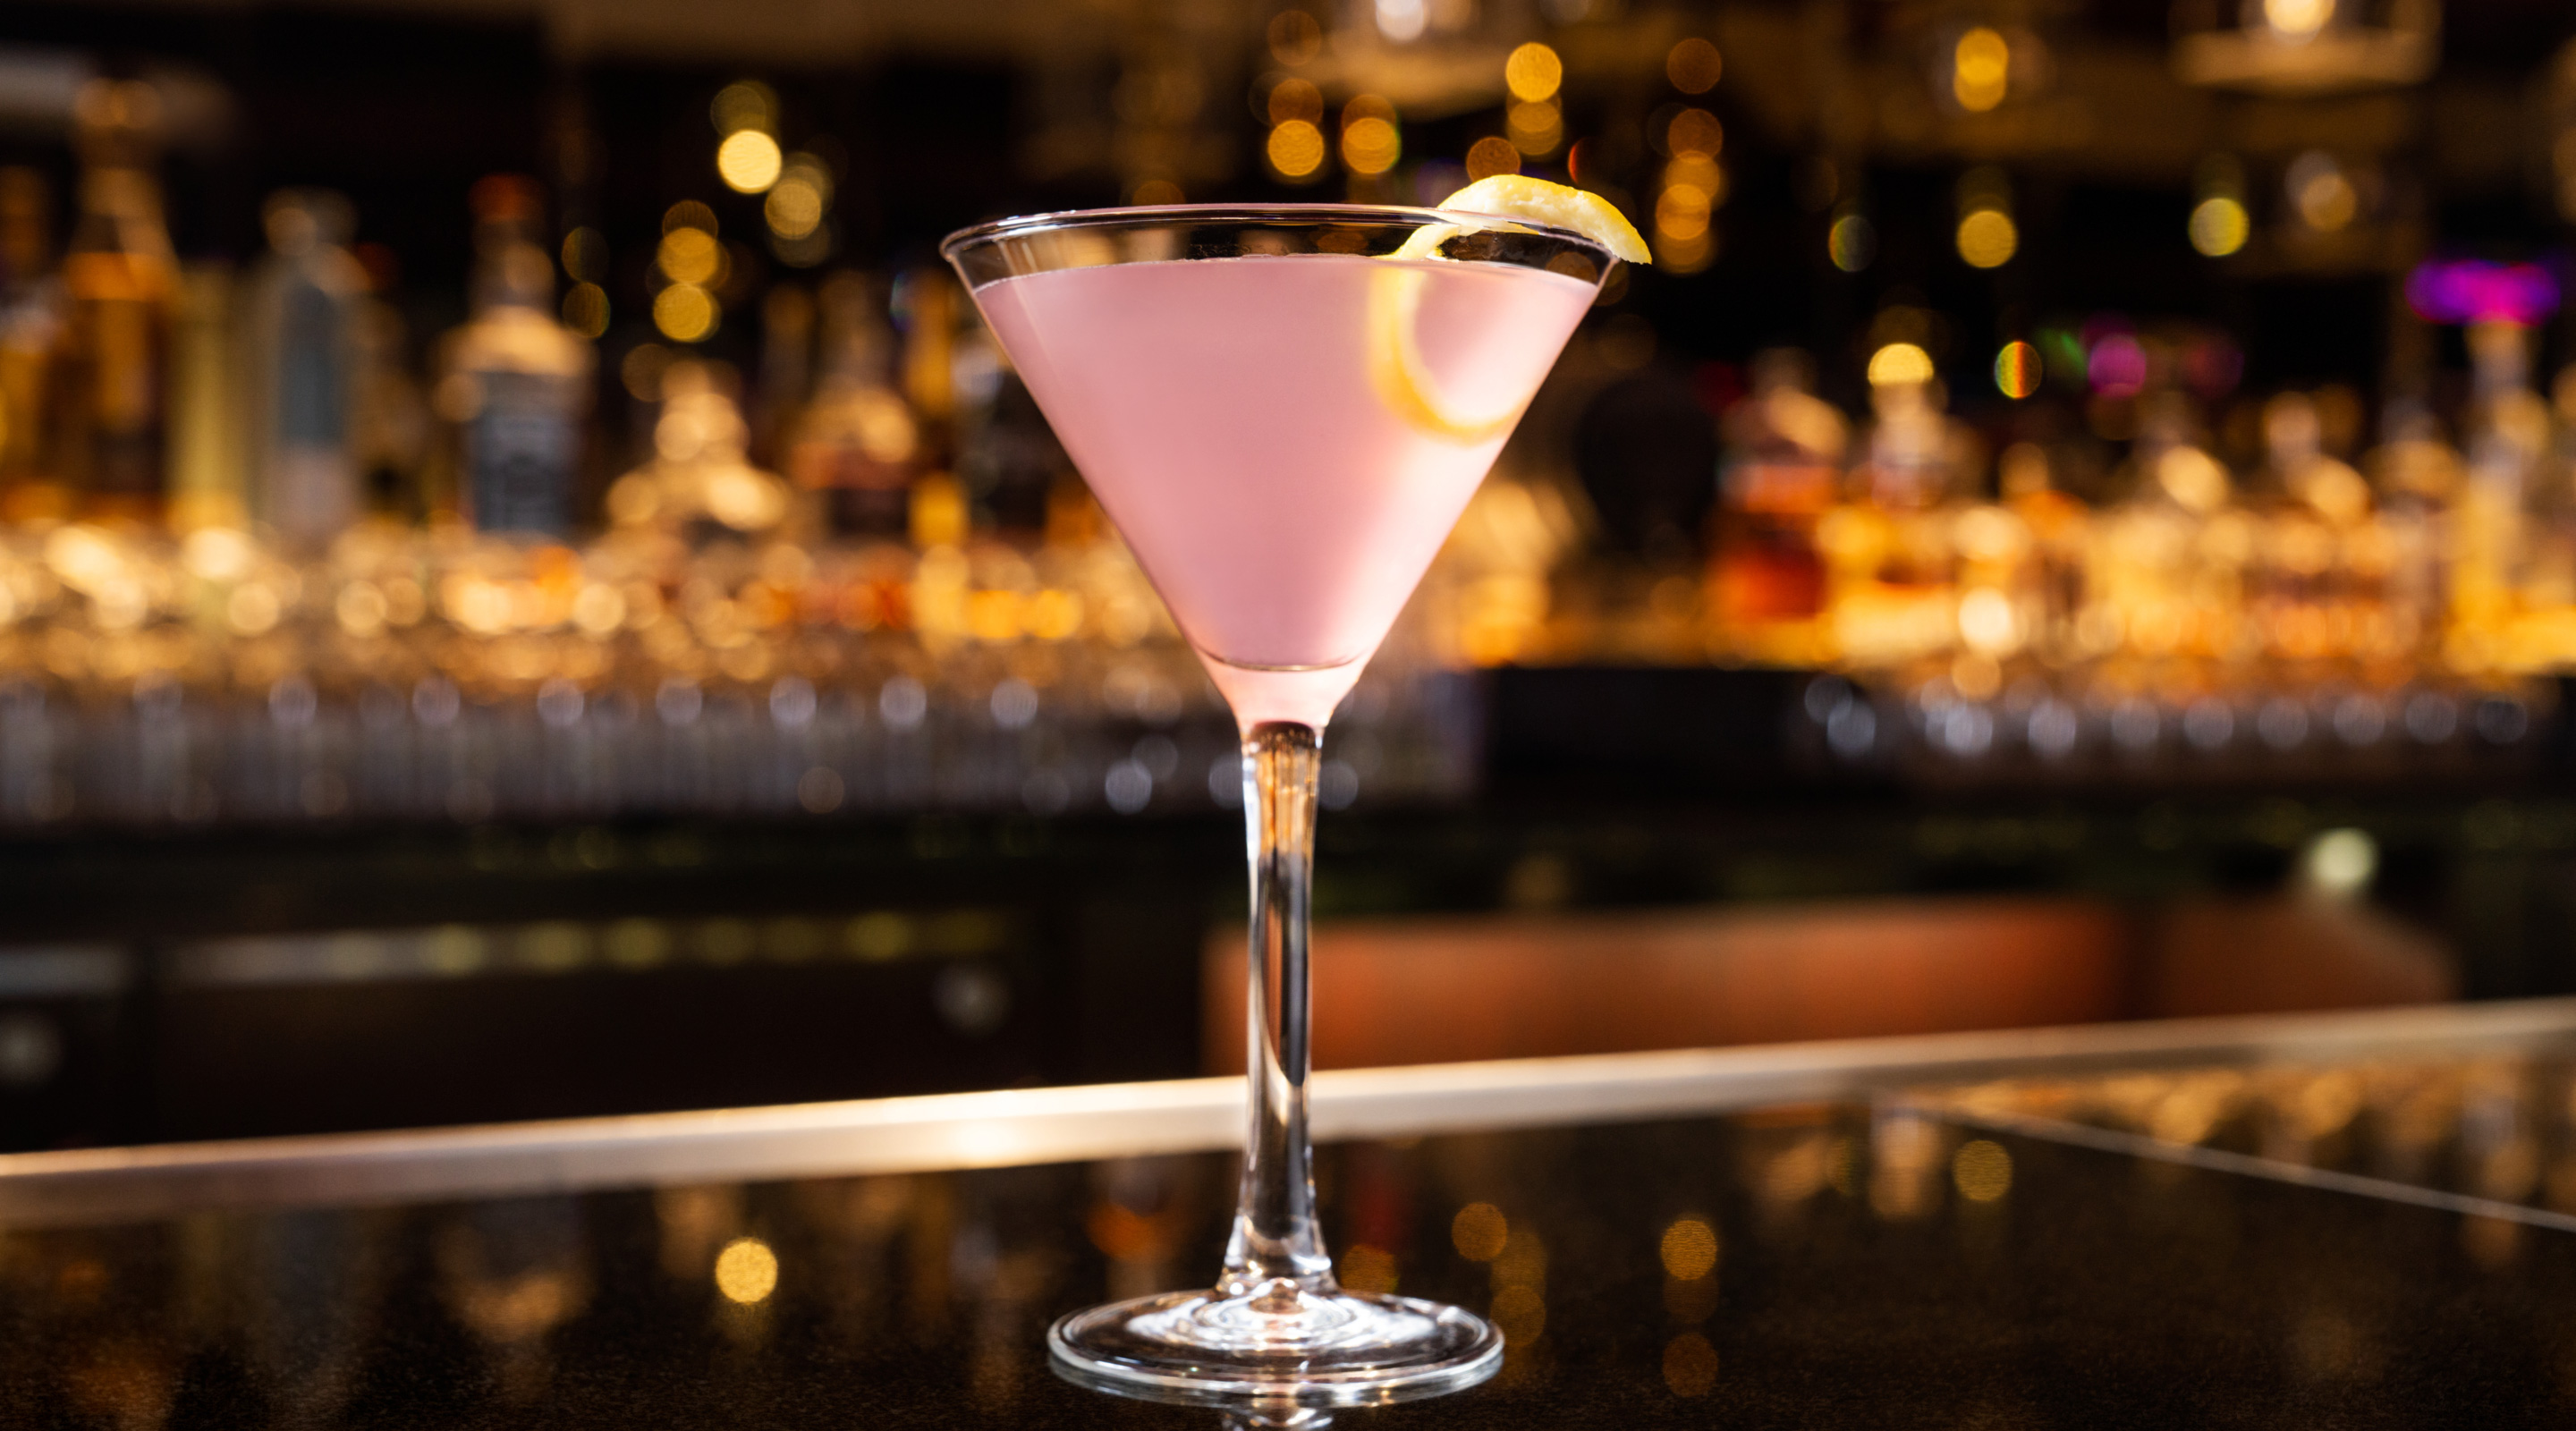 A Lavender Pearl Martini with a lemon peel garnish on a bar.